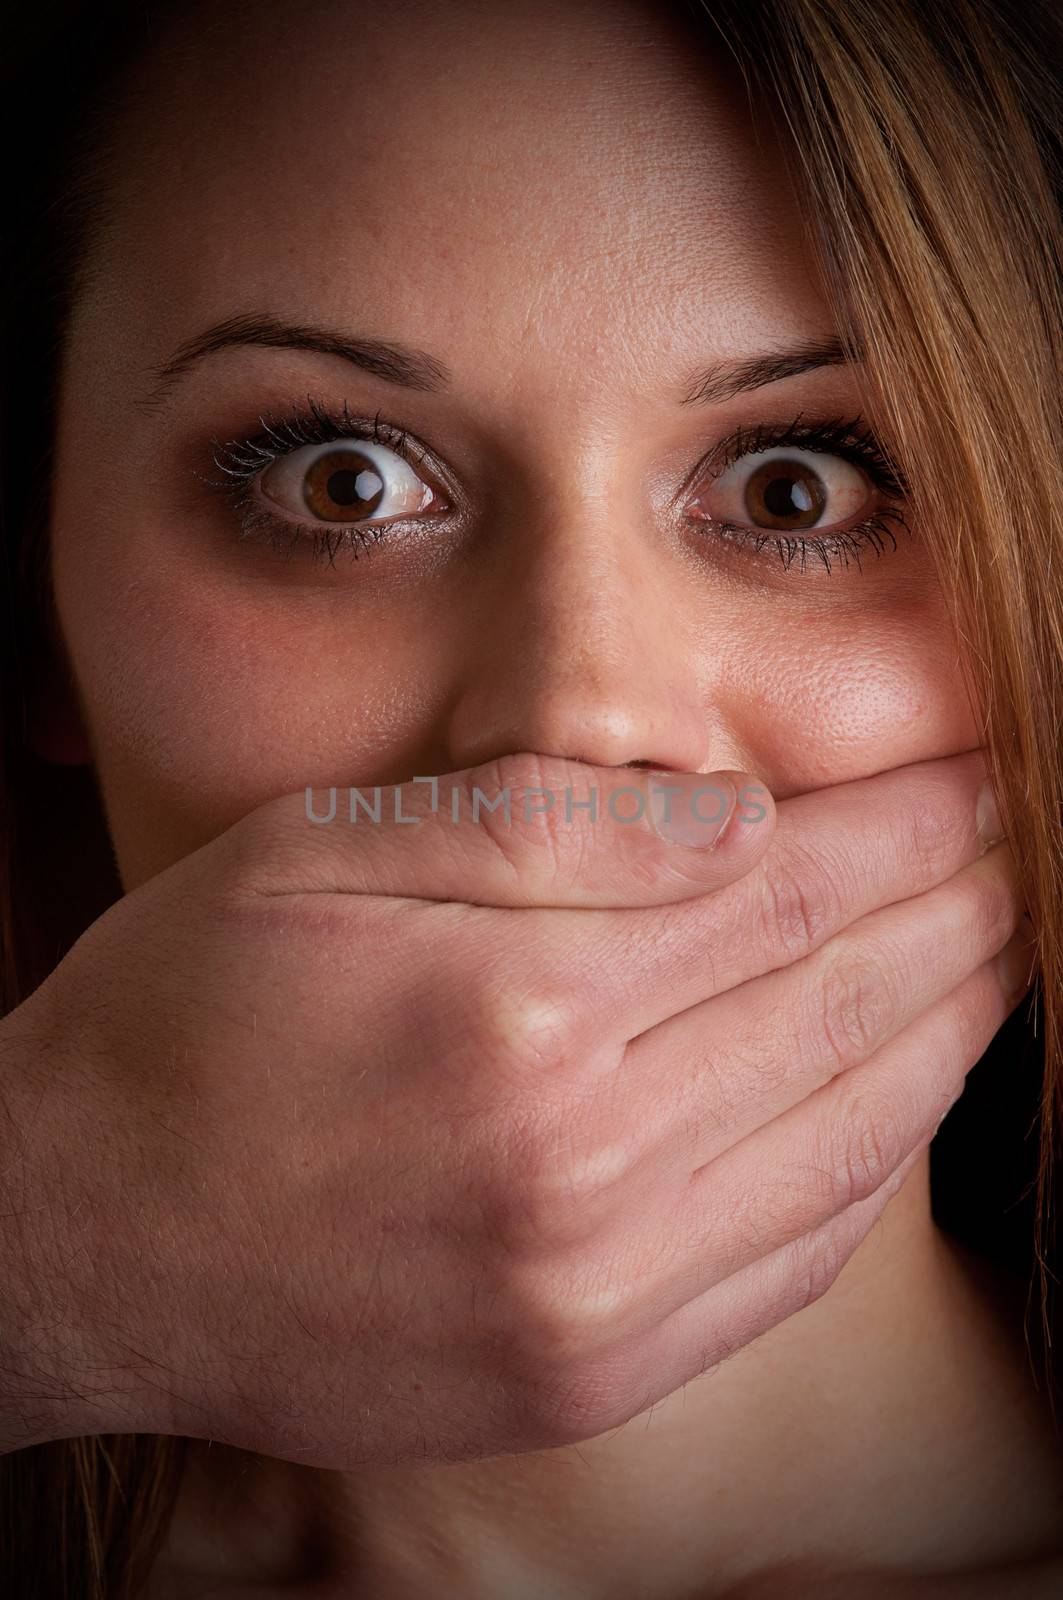 Woman Silenced by Aggressive Husband by ruigsantos